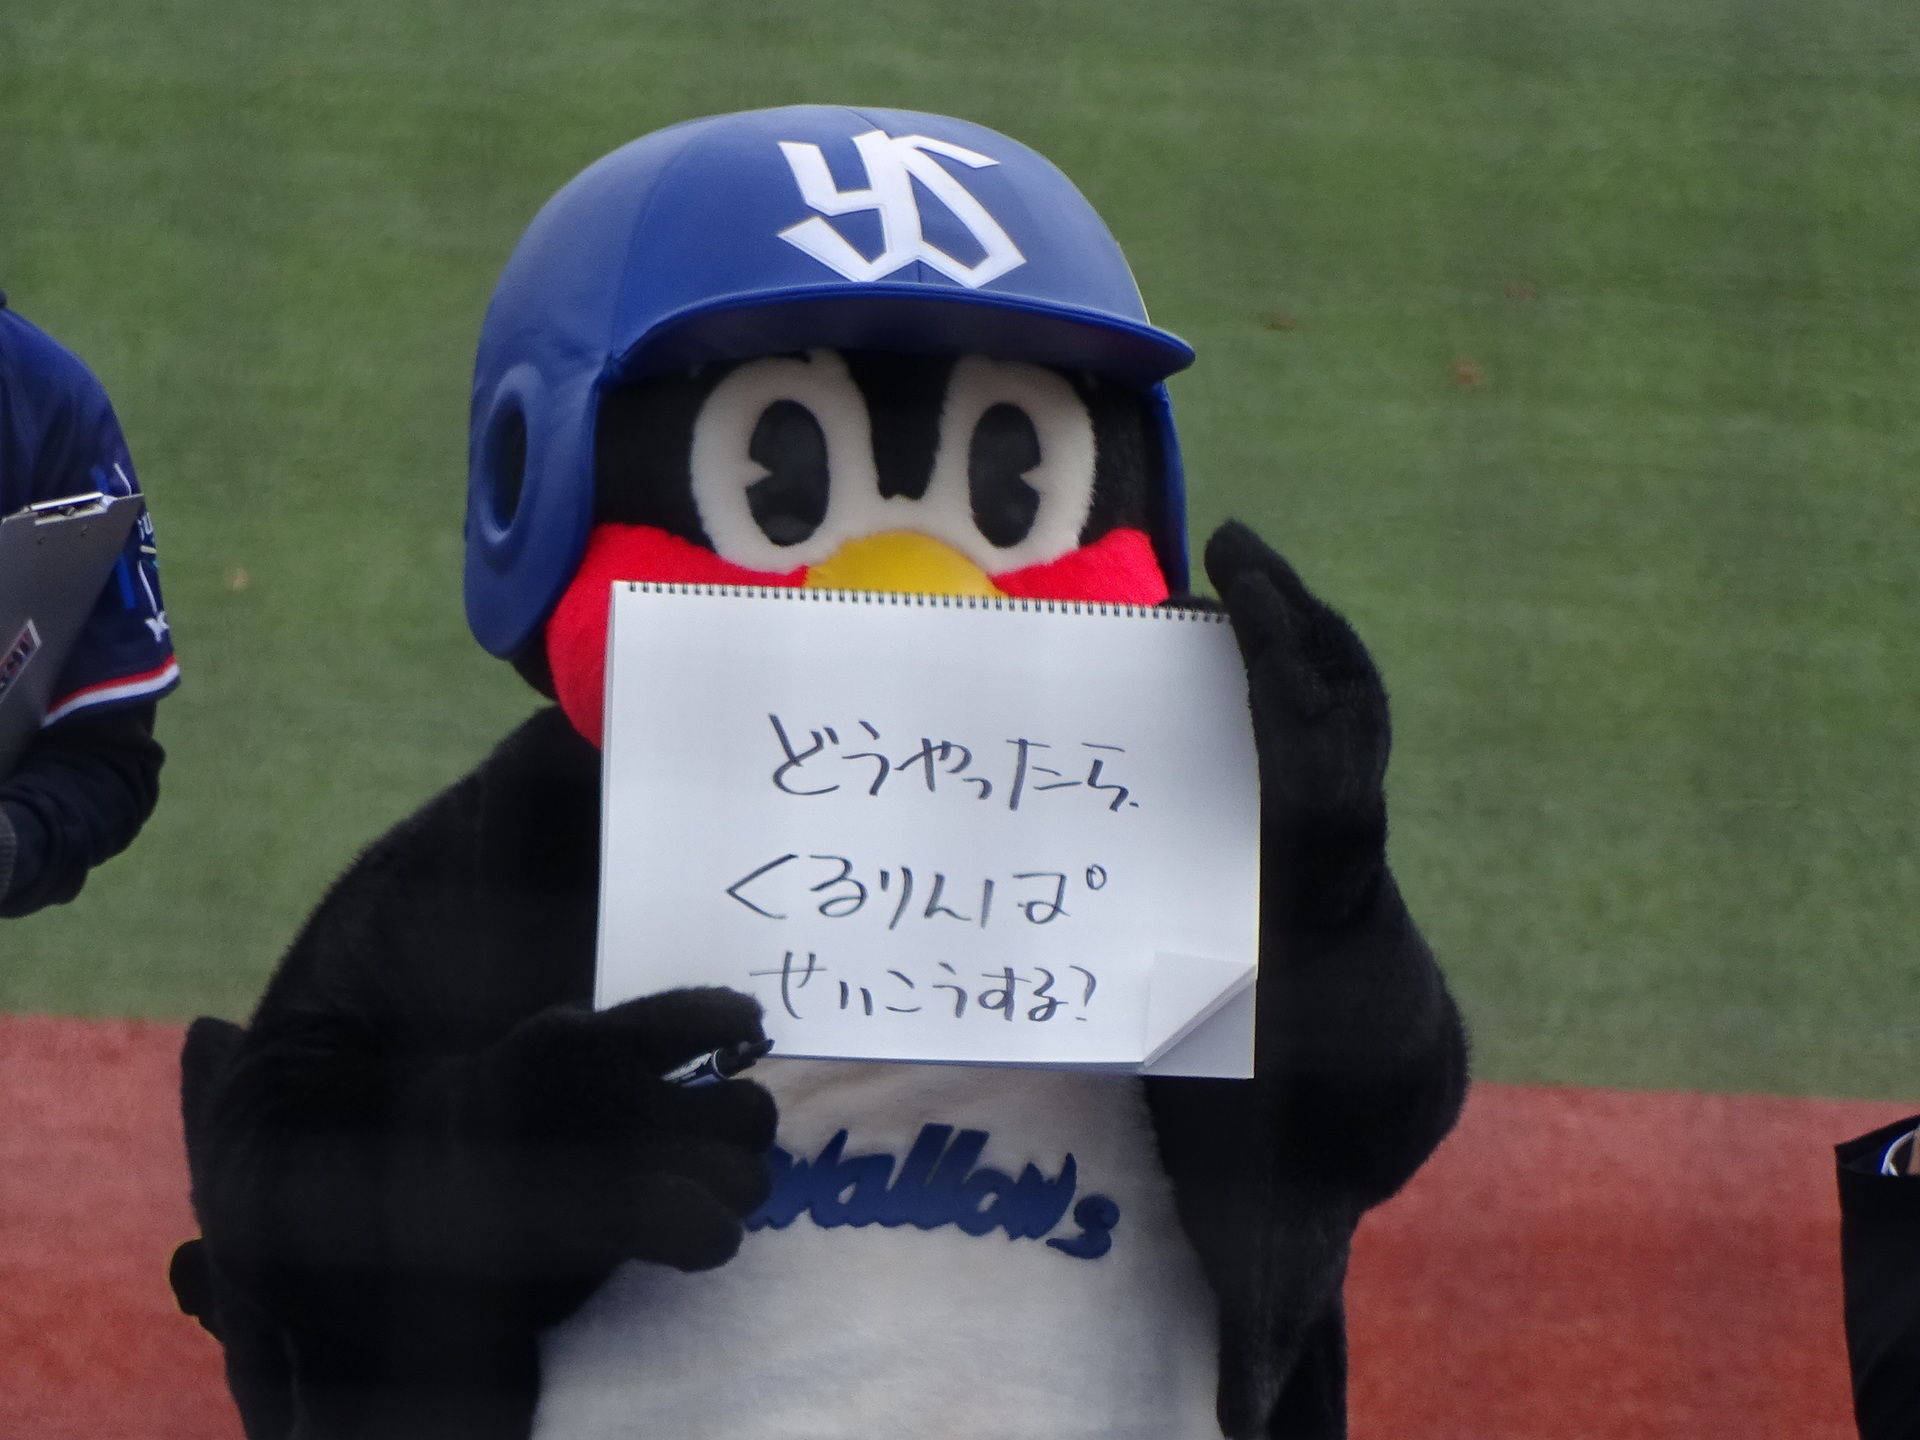 SWALLOWS (23): 試合見聞LOG -東京ヤクルトスワローズ応援ブログ-